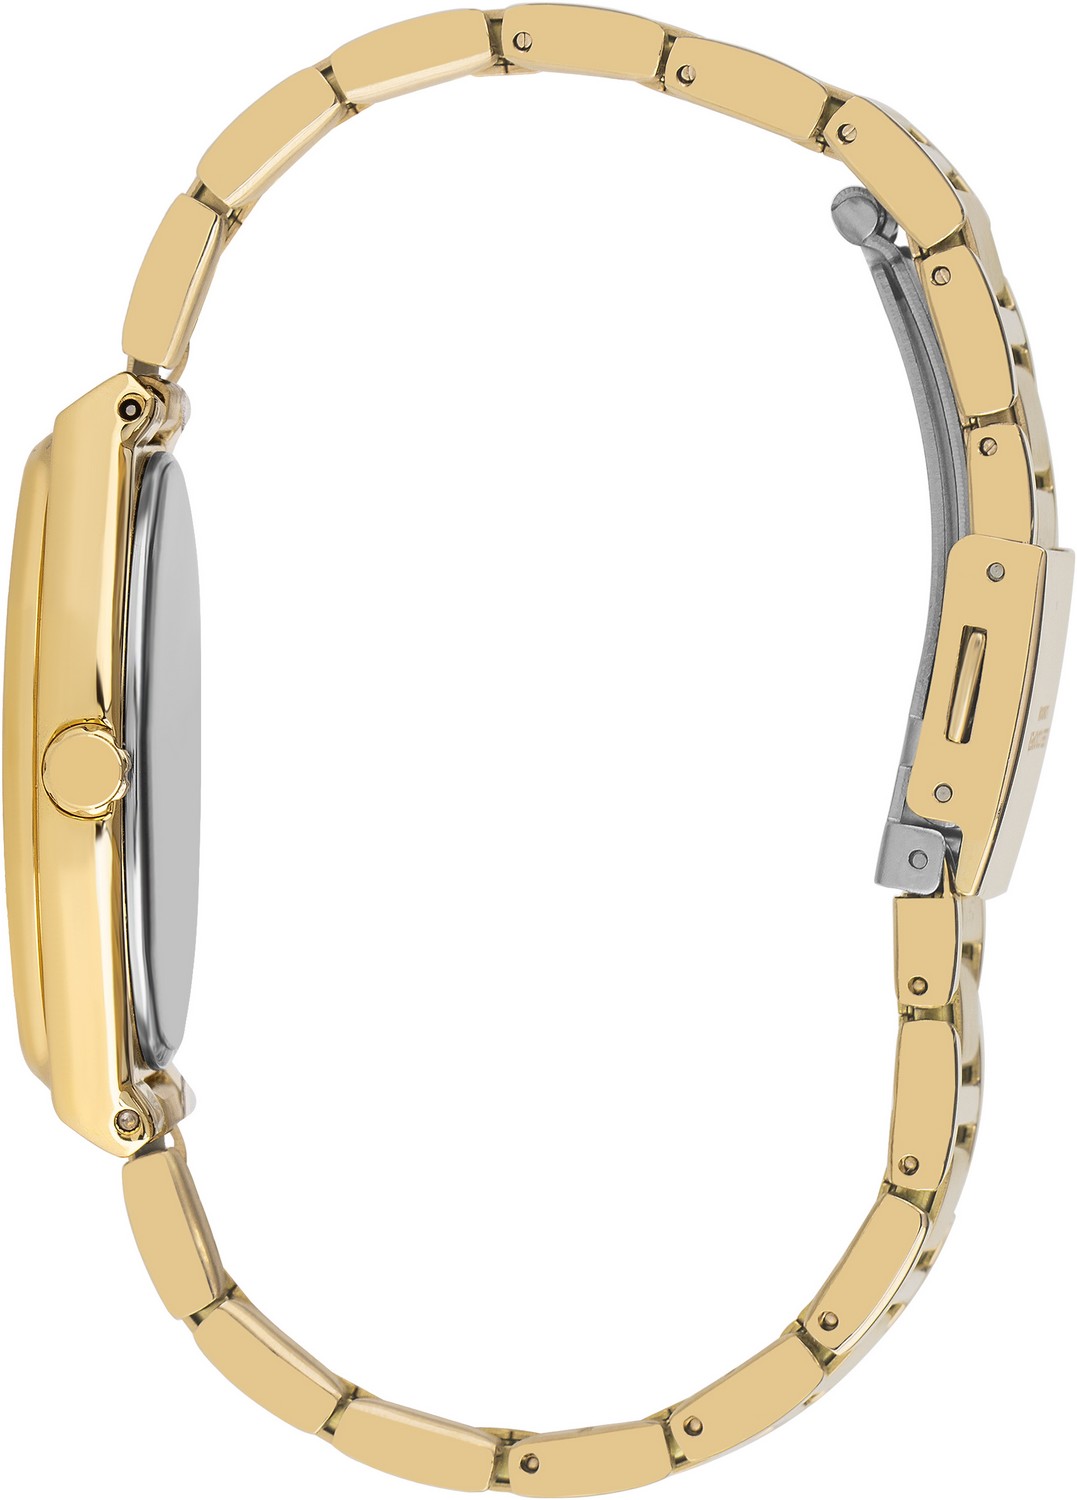 LEE COOPER  Женские часы, кварцевый механизм, суперметалл с покрытием, 35 мм